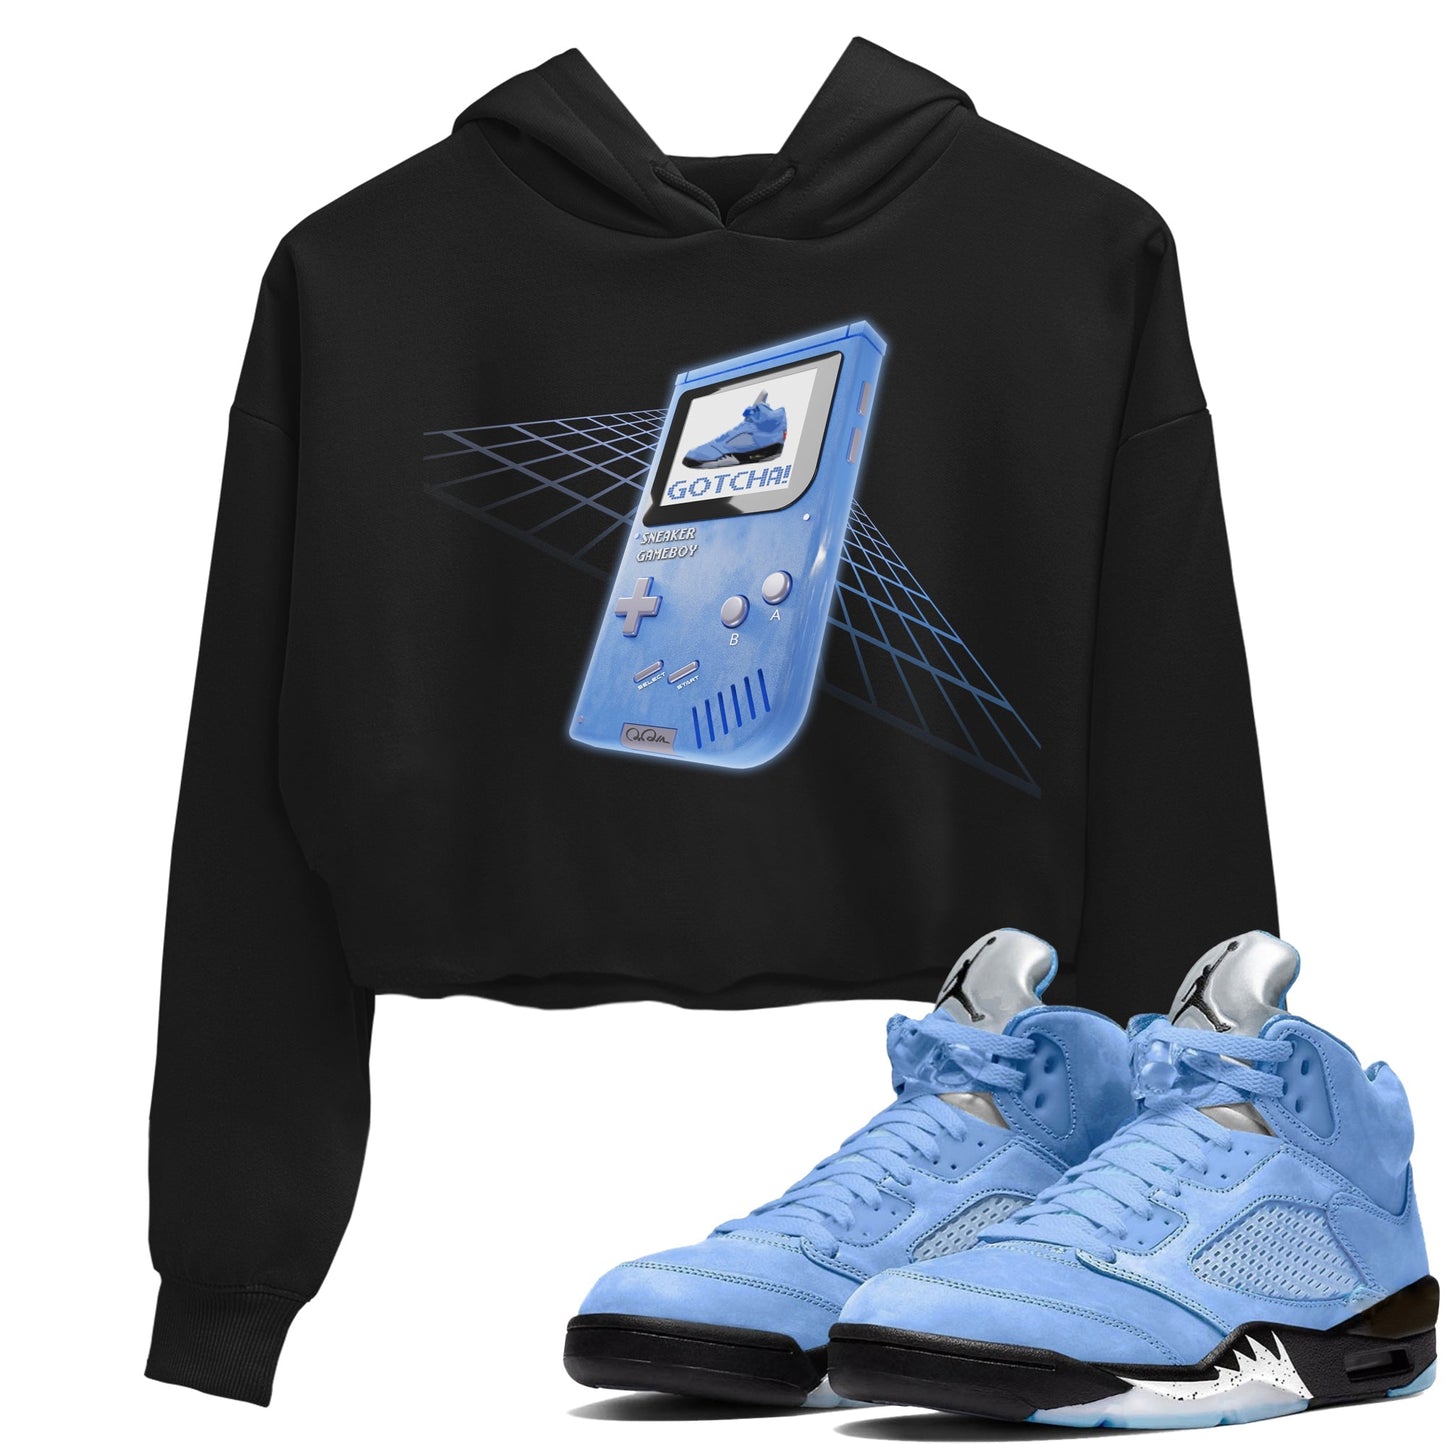 Air Jordan 5 UNC Sneaker Tees Drip Gear Zone Sneaker Game Boy Sneaker Tees AJ5 UNC Shirt Women's Shirts Black 1